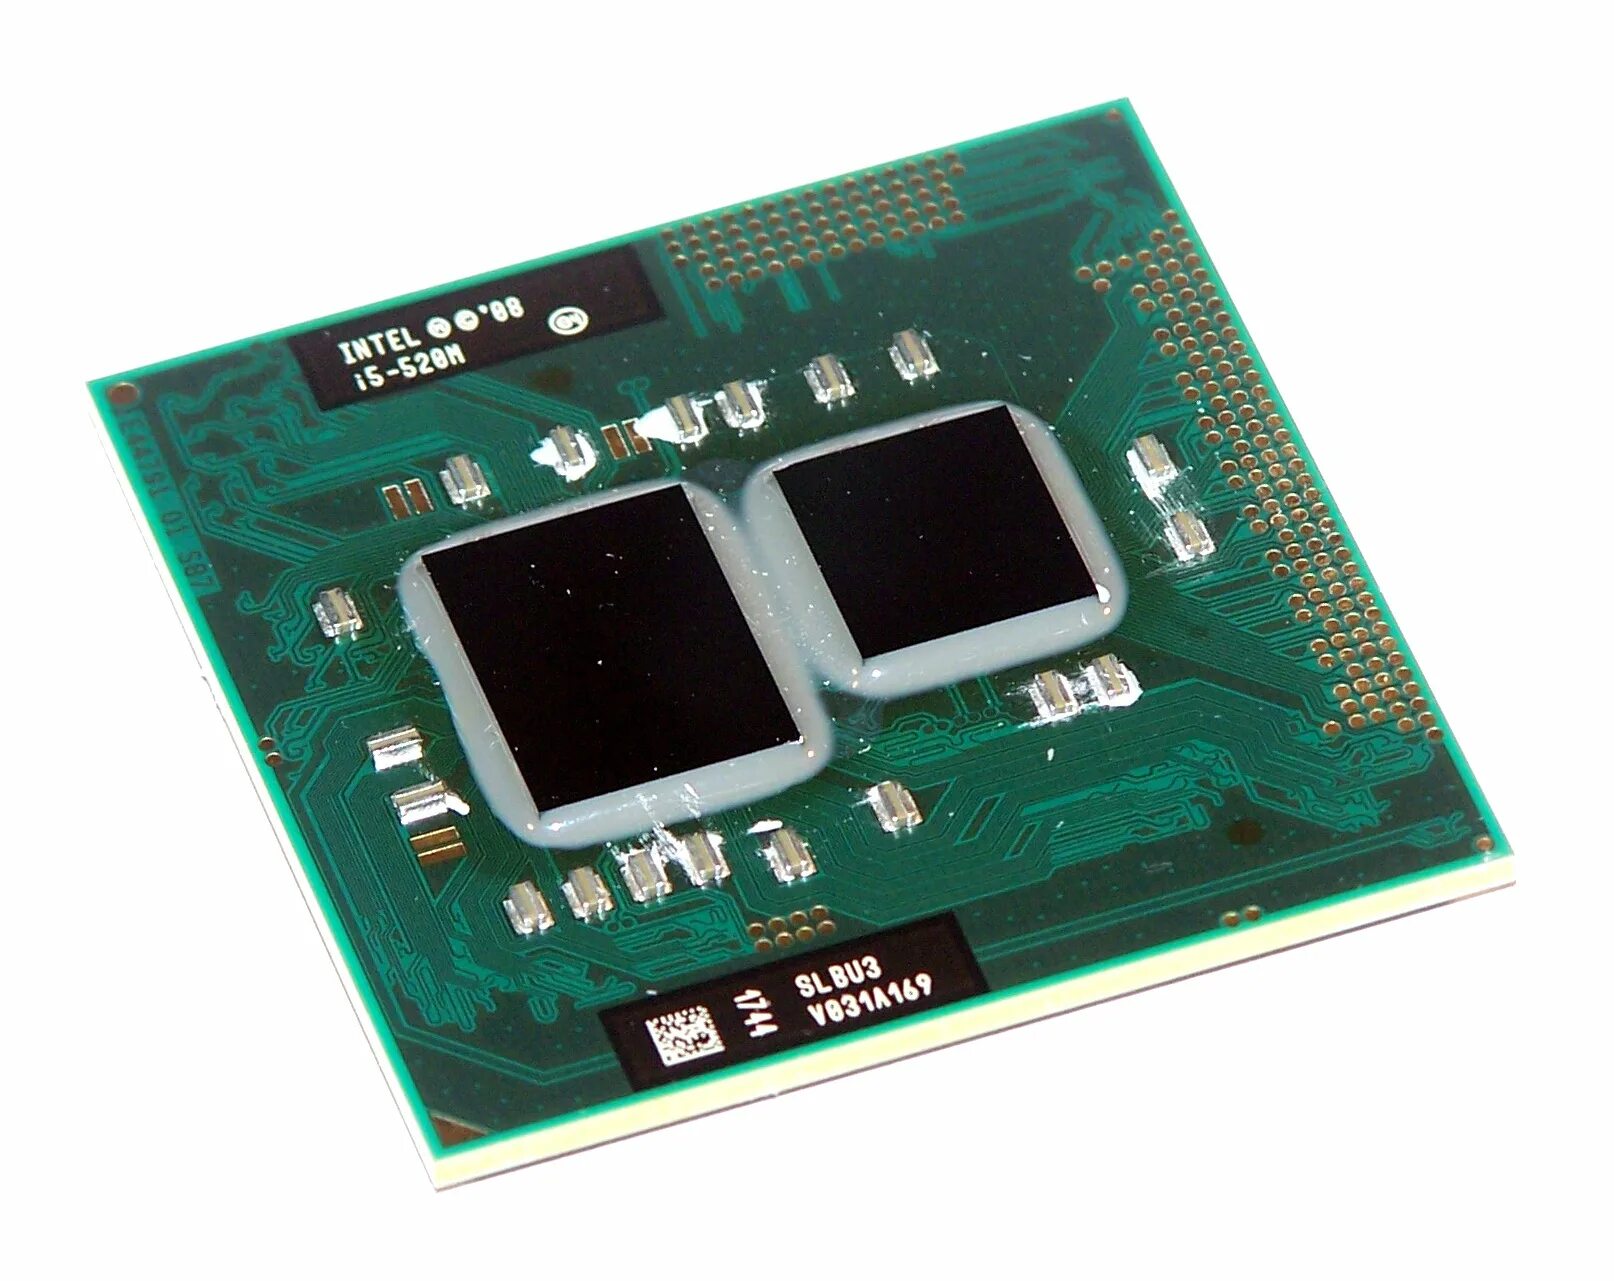 Модель процессора ноутбука. Core i5 520m. Intel Core i5-520m (pga988). Процессор для ноутбука Intel Core i5. Процессор Intel Core i5 450m для ноутбука.